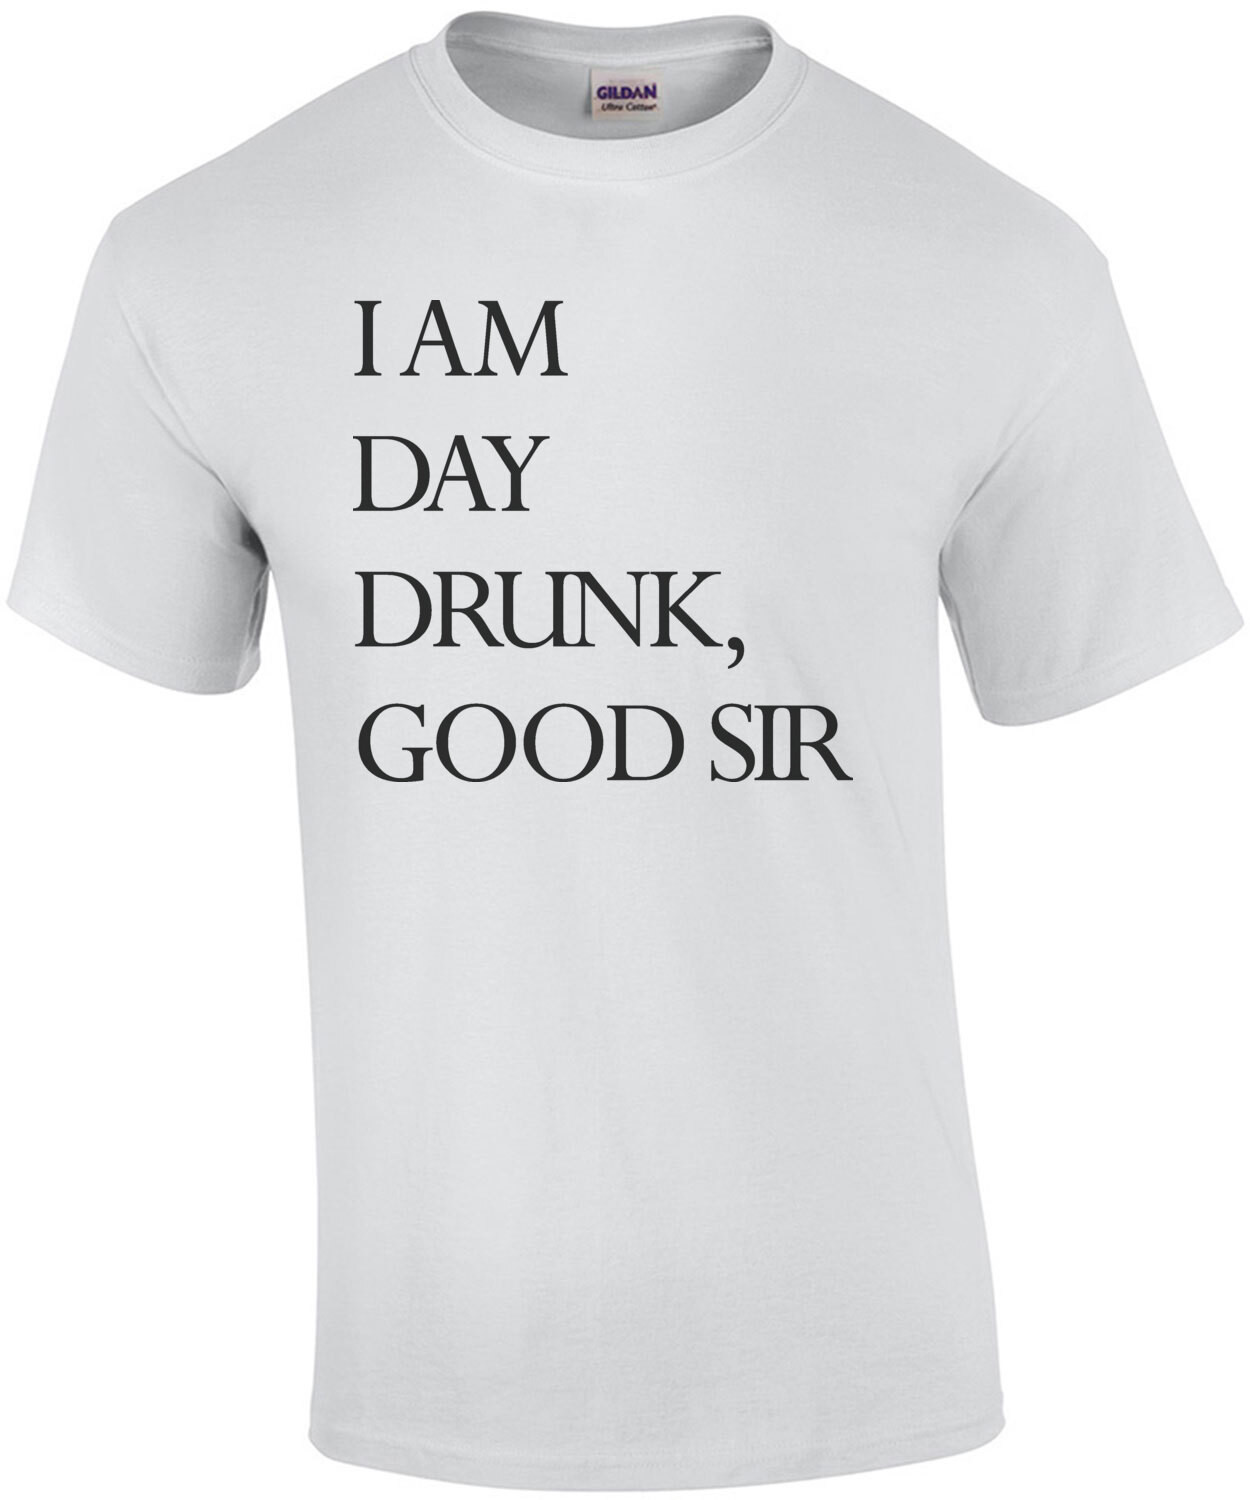 I am day drunk, good sir - funny drinking t-shirt